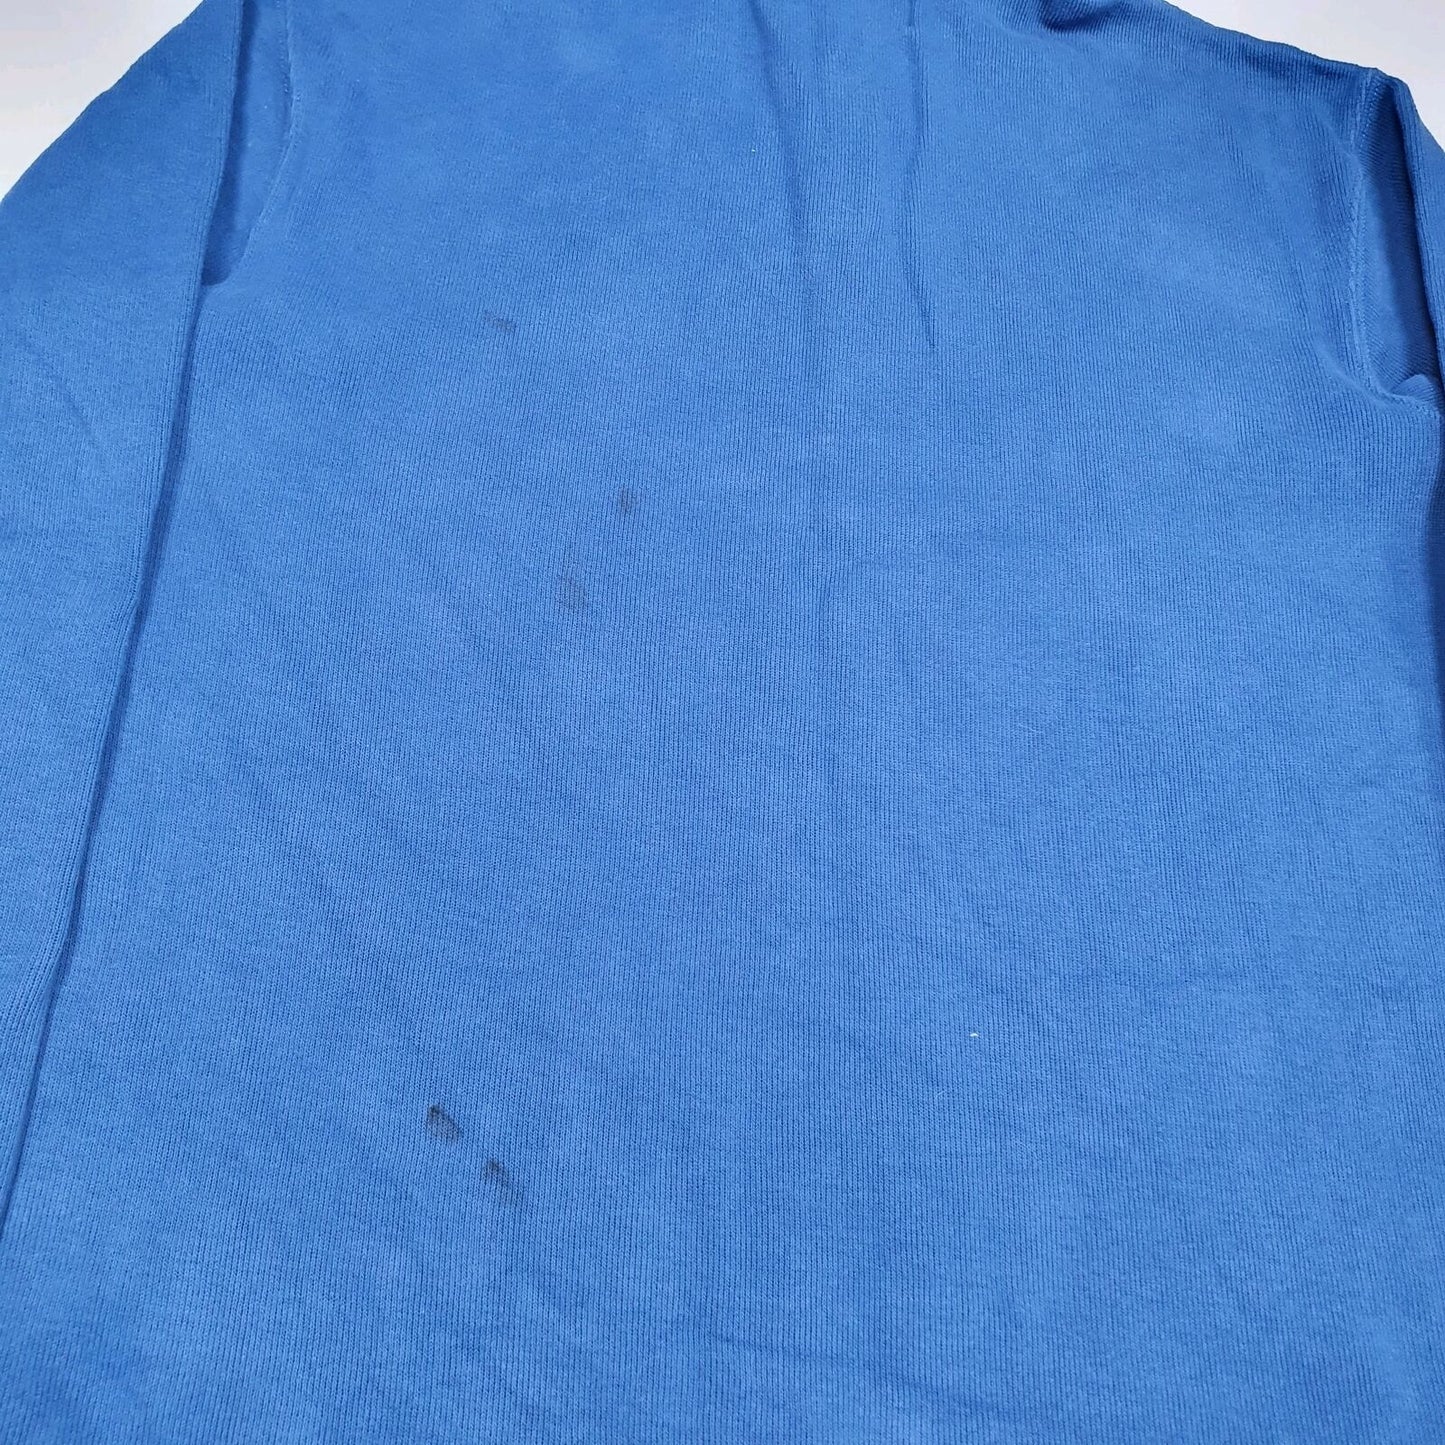 Mens POLO RALPH LAUREN Cotton 1/4 Quarter Zip Jumper Sweatshirt L